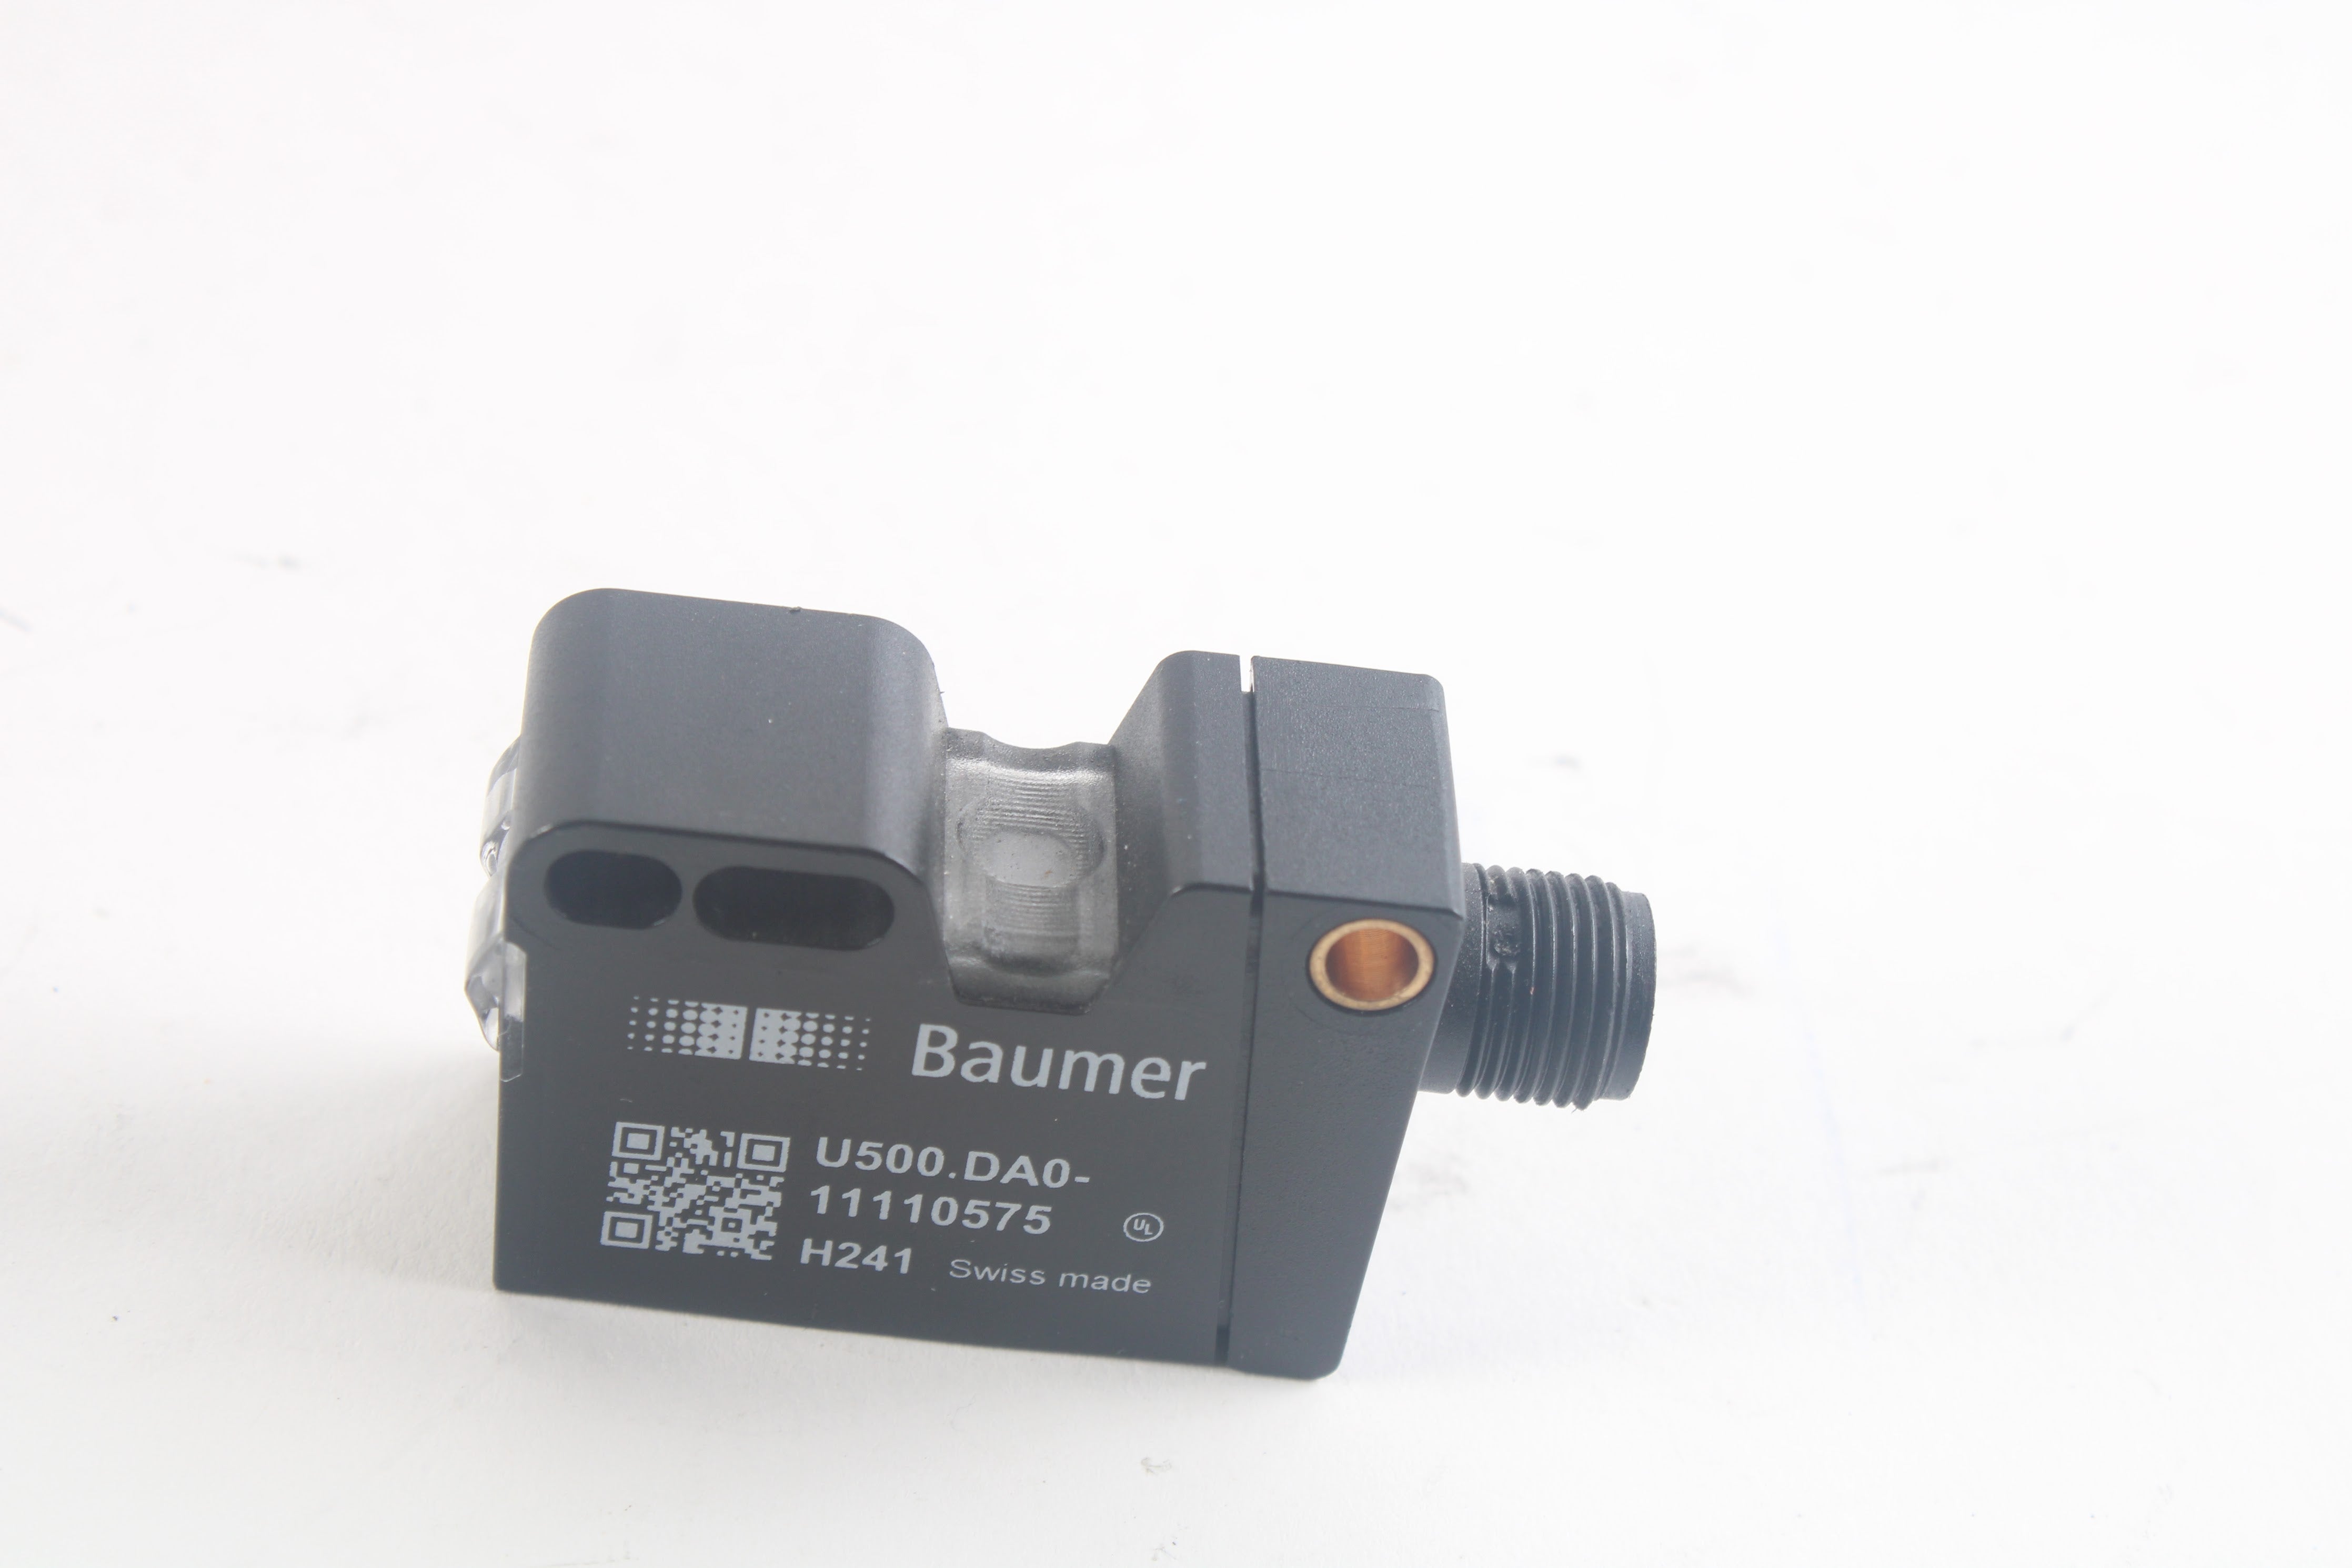 Baumer Ultrasonic Distance Measuring Sensor – NTC  Tech